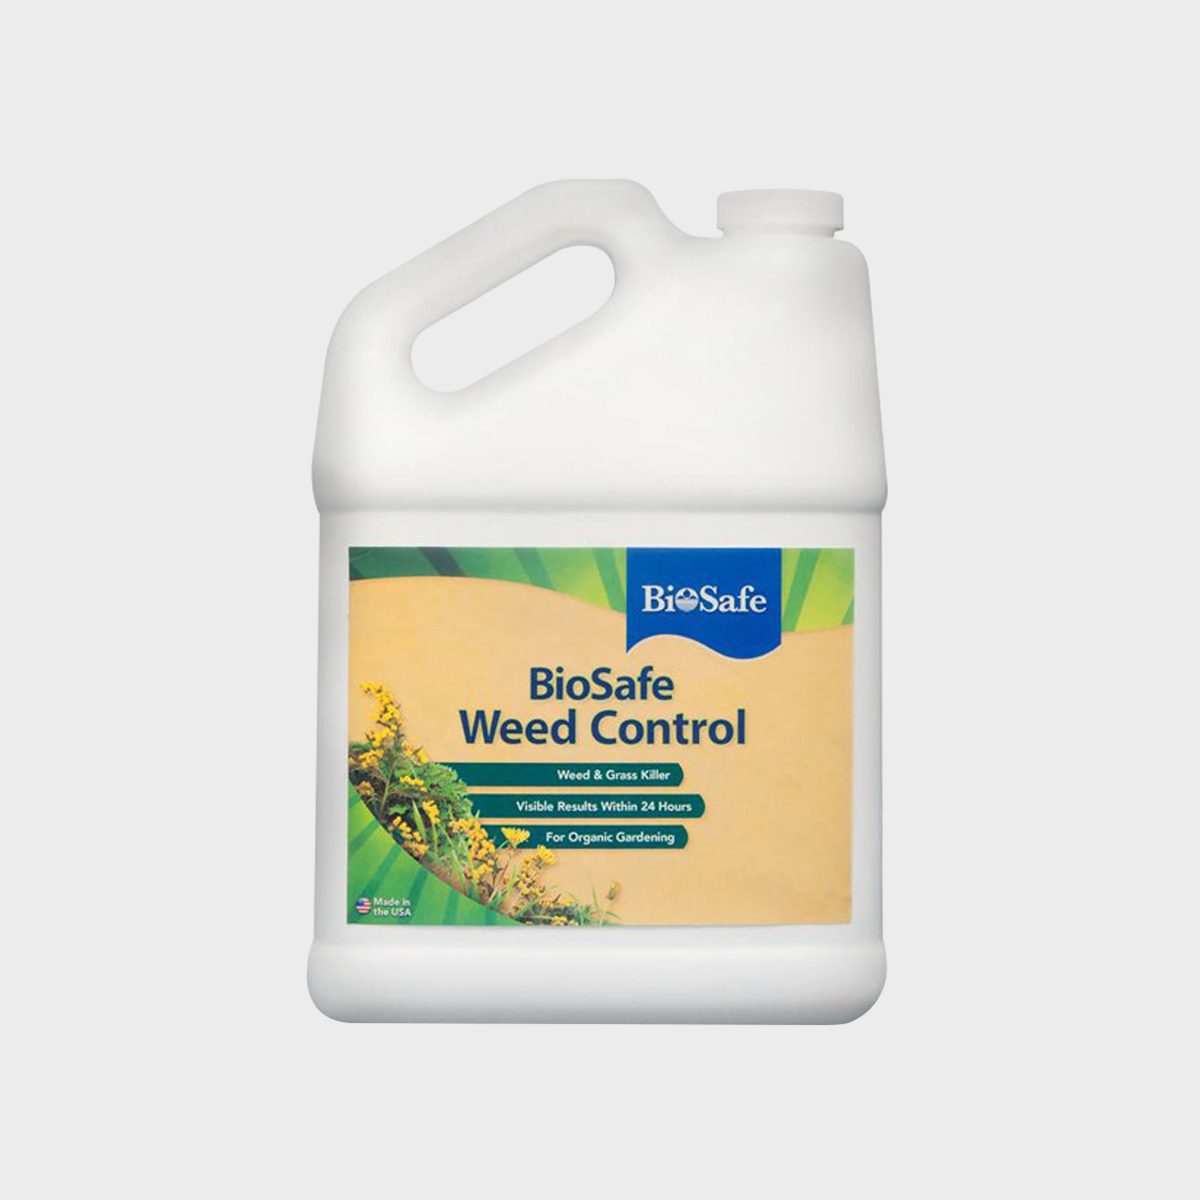 Biosafe Weed Control Ecomm Walmart.com